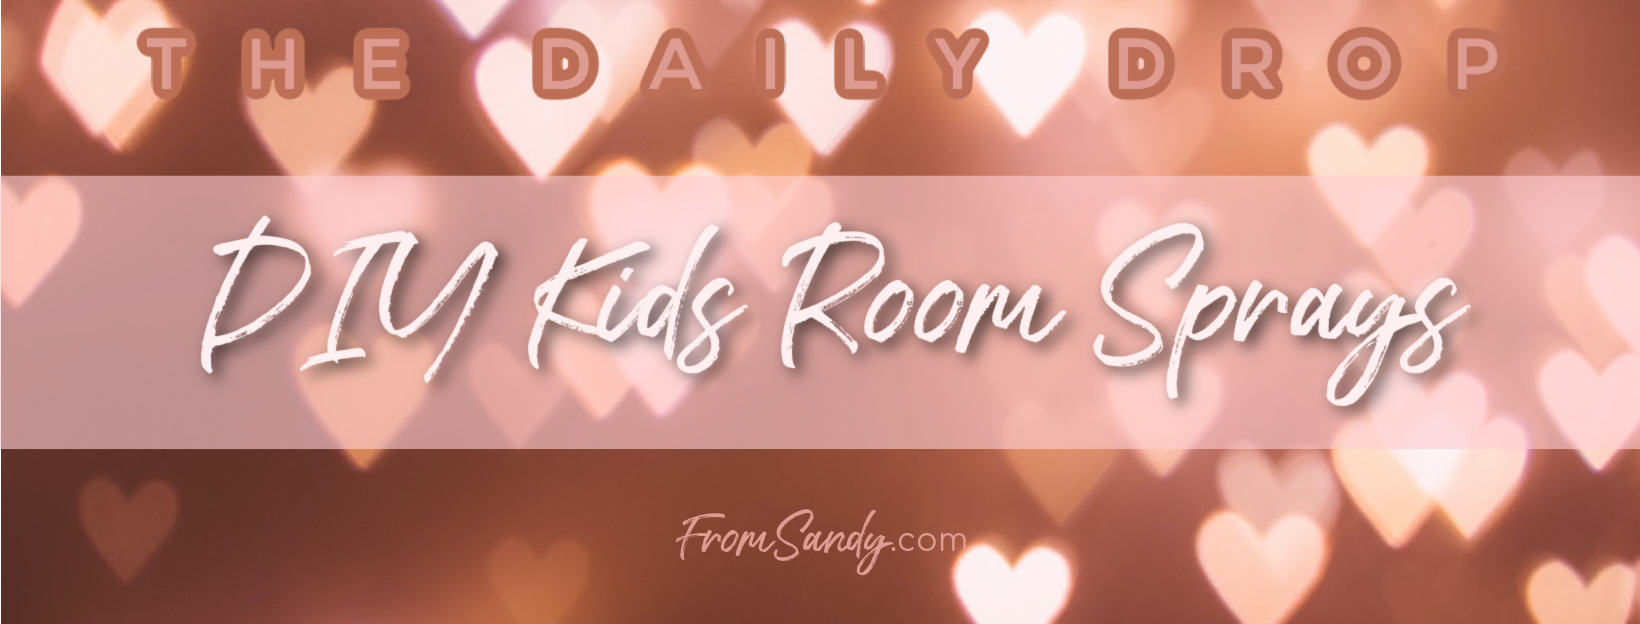 DIY Kids Room Sprays, From Sandy